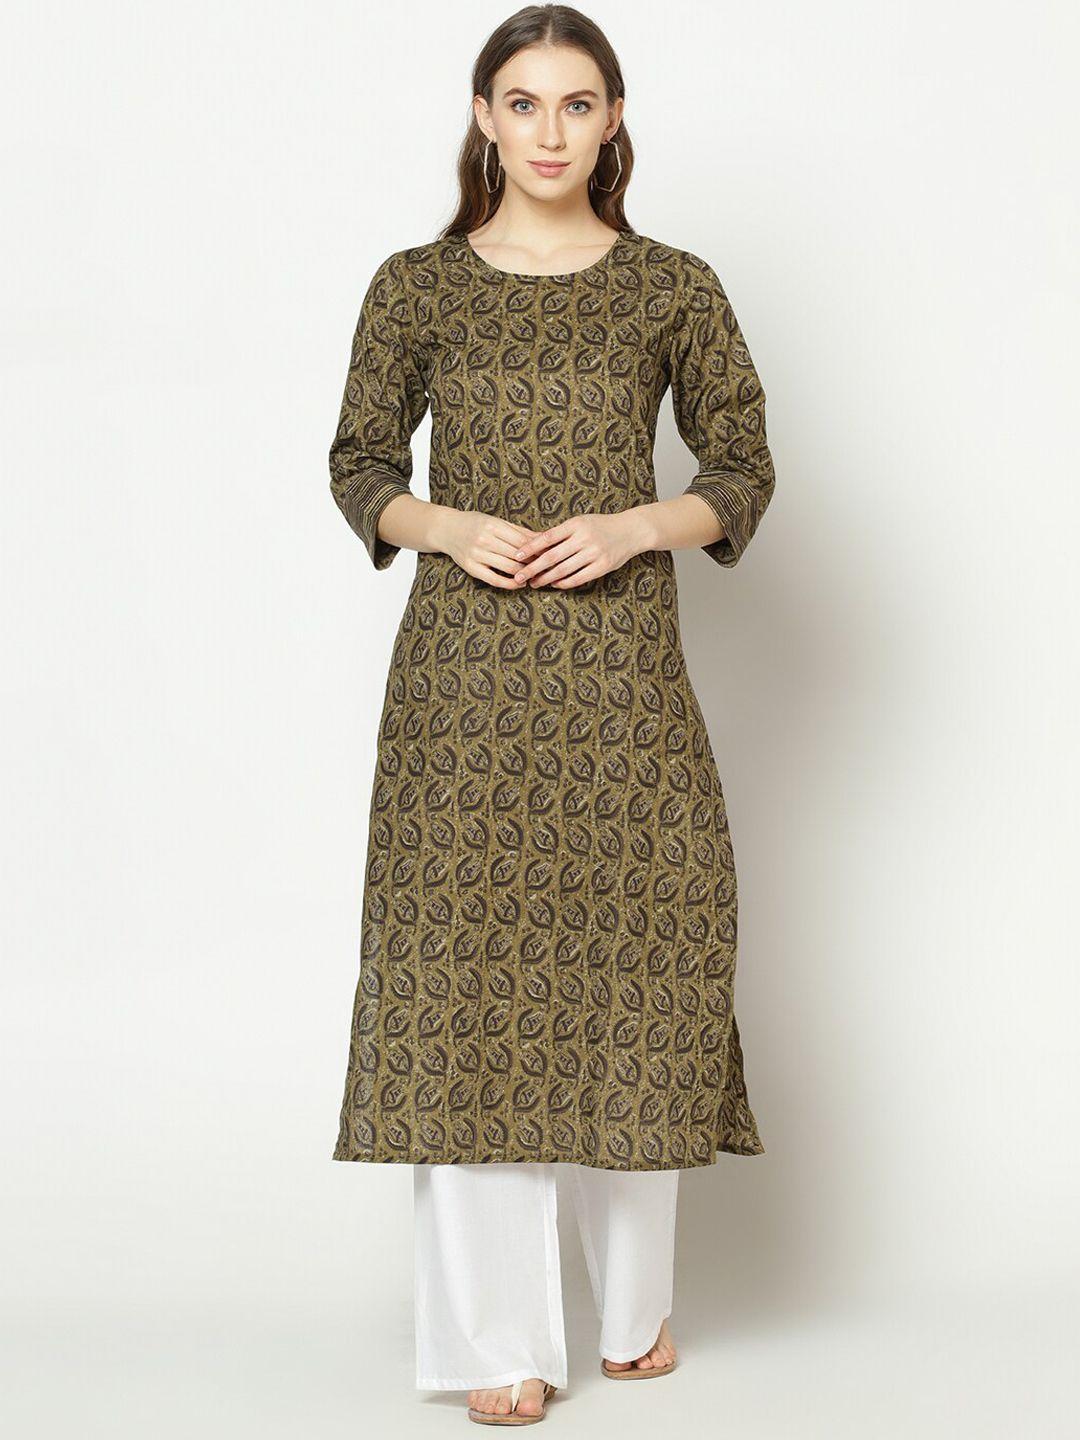 znx clothing women olive green ethnic motifs printed kurta